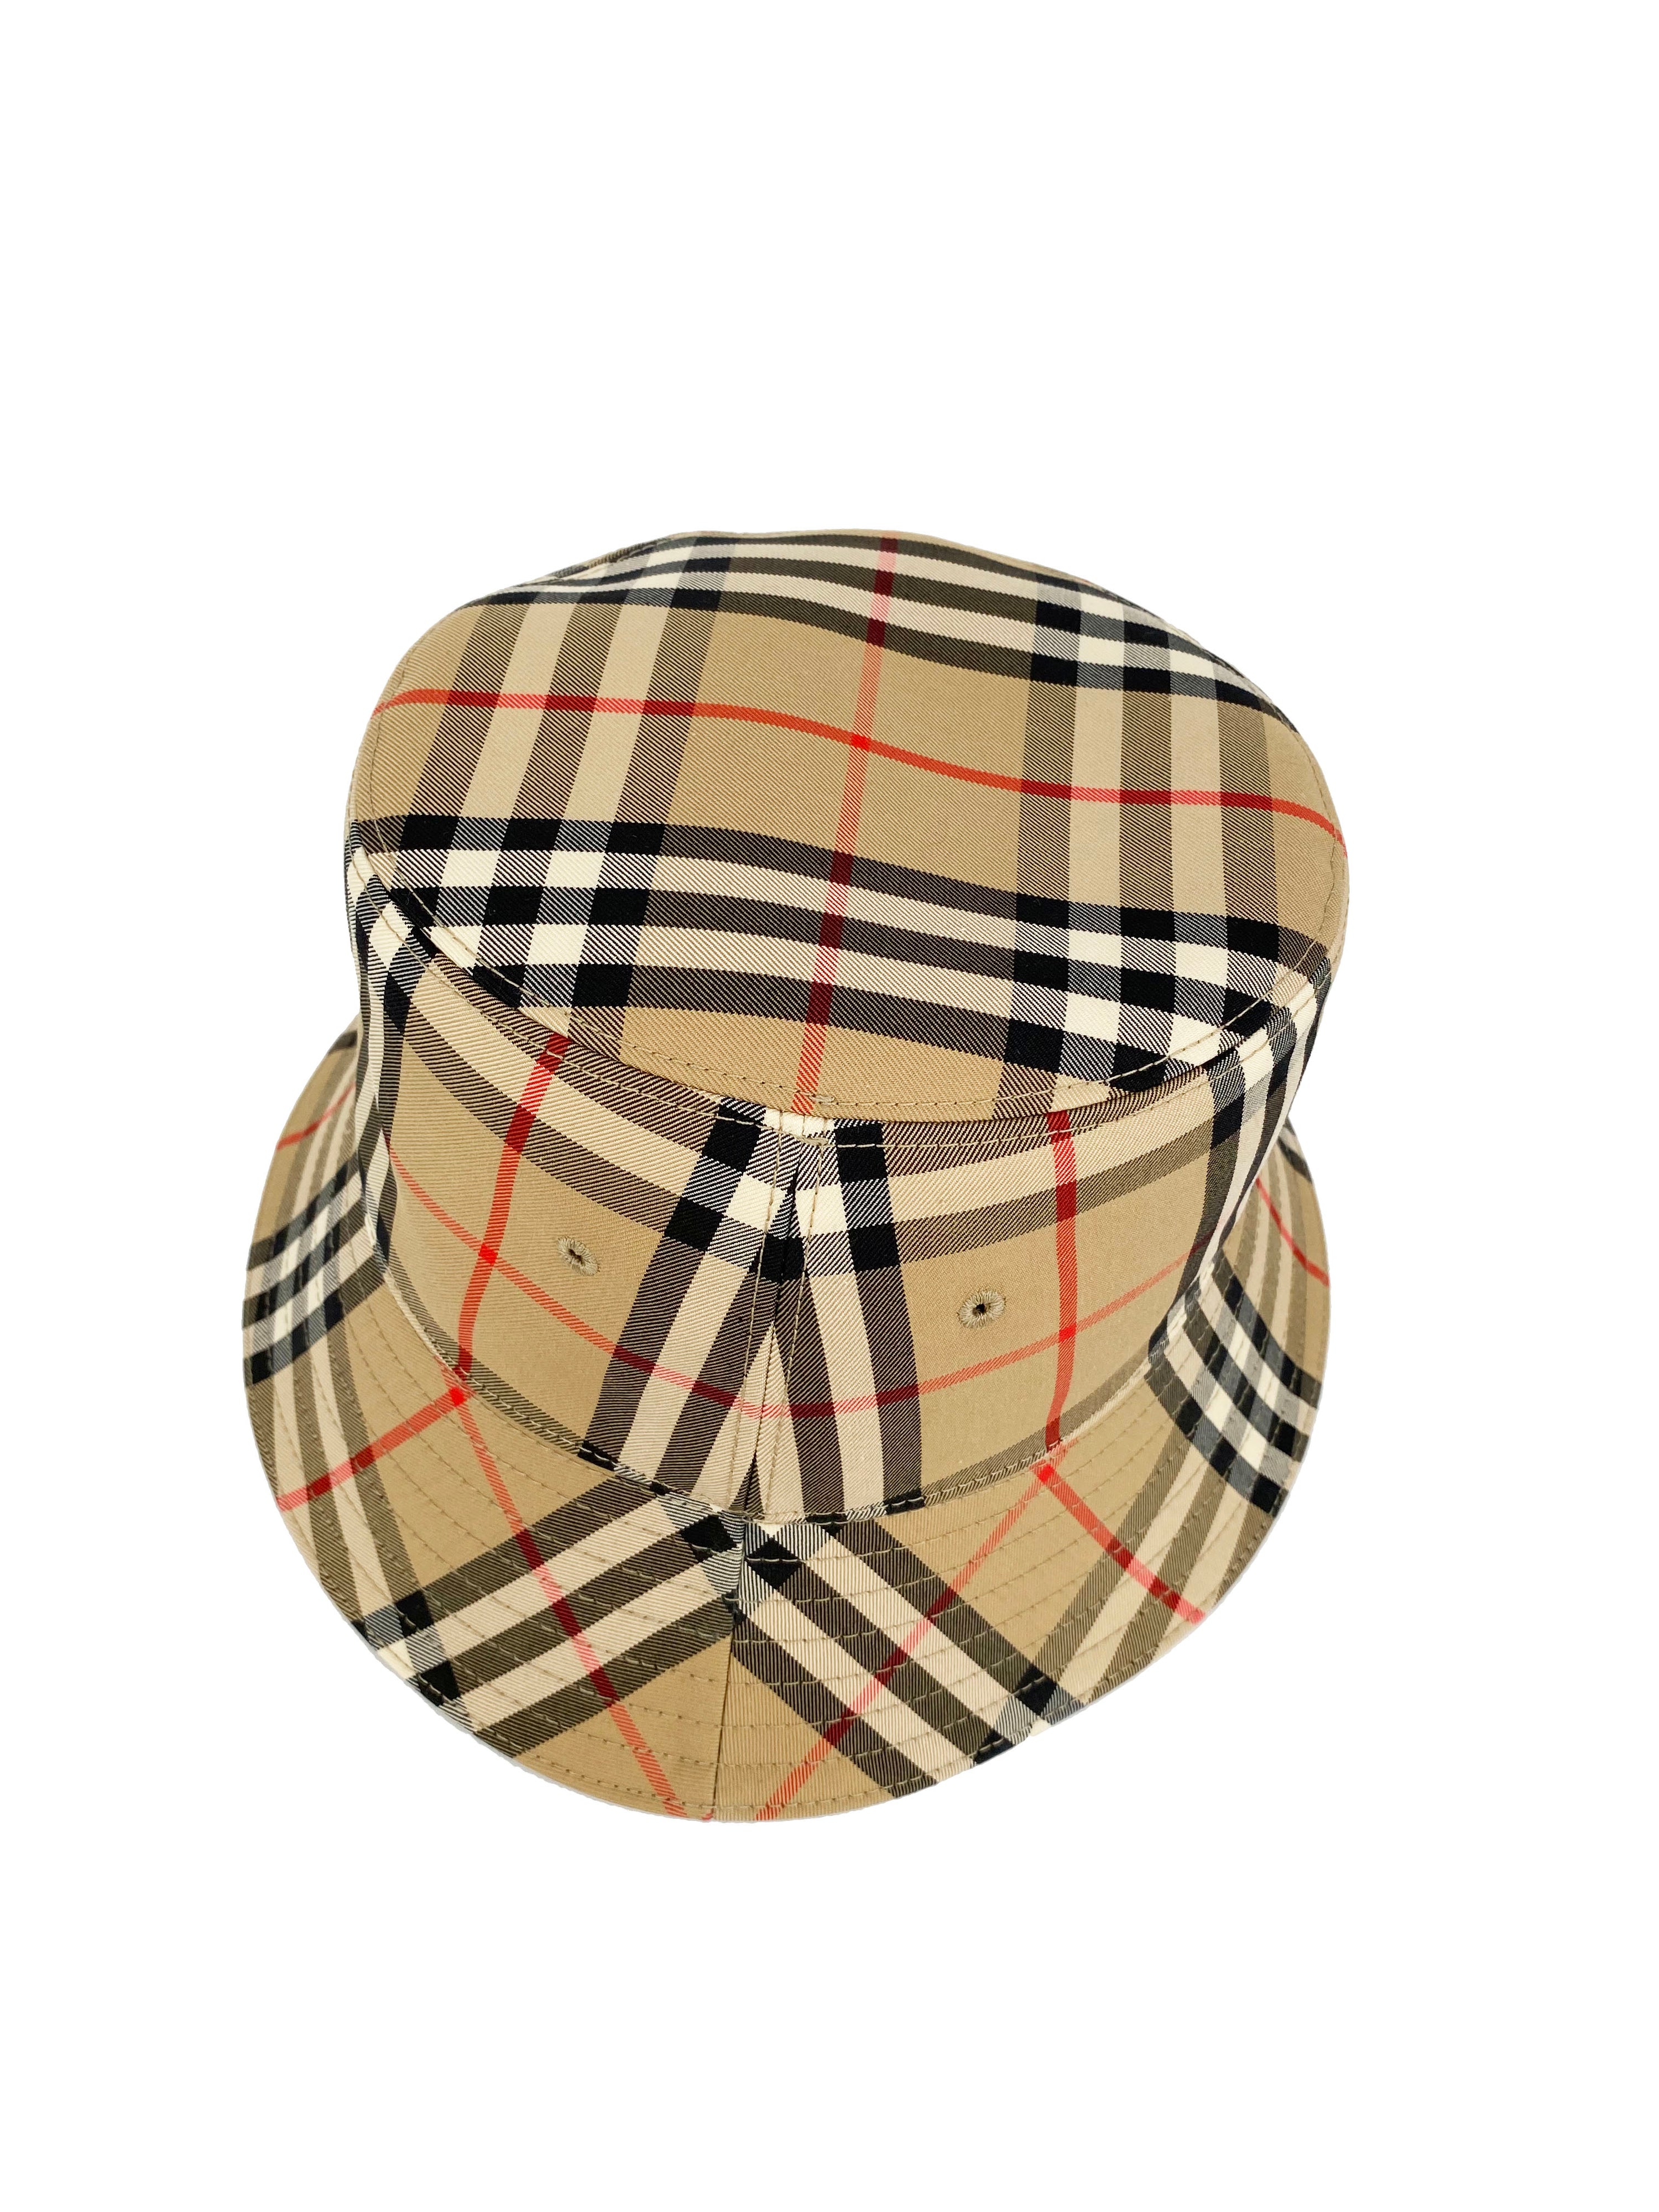 Burberry Vintage Check Technical Cotton Bucket Hat S